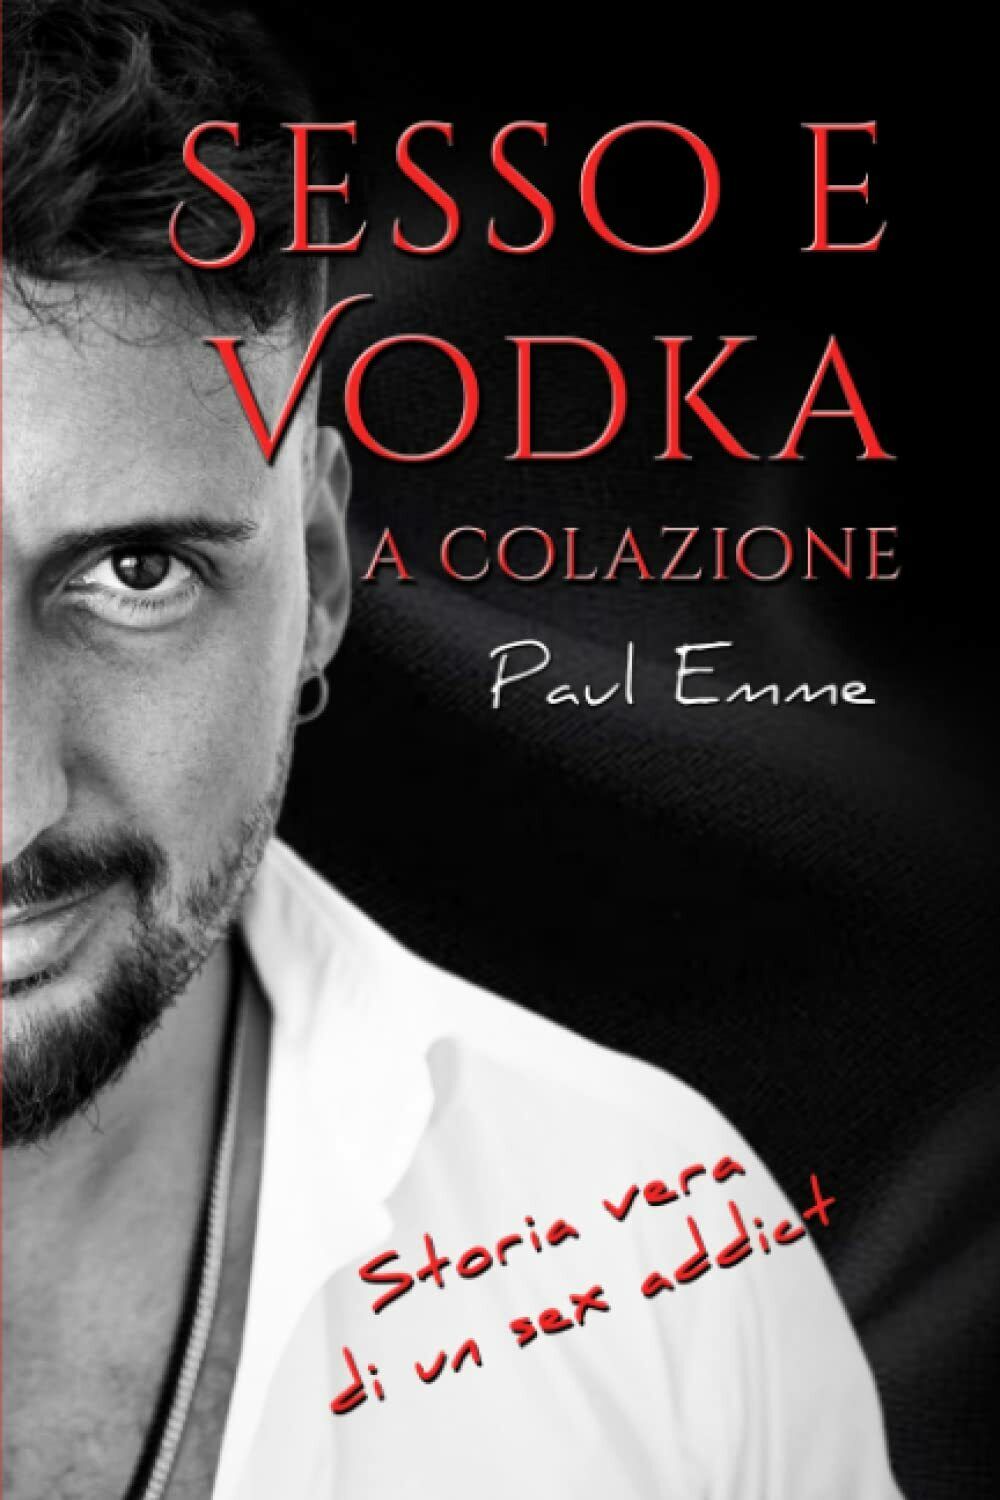 Sesso e vodka a colazione di Paul Emme,  2021,  Indipendently Published